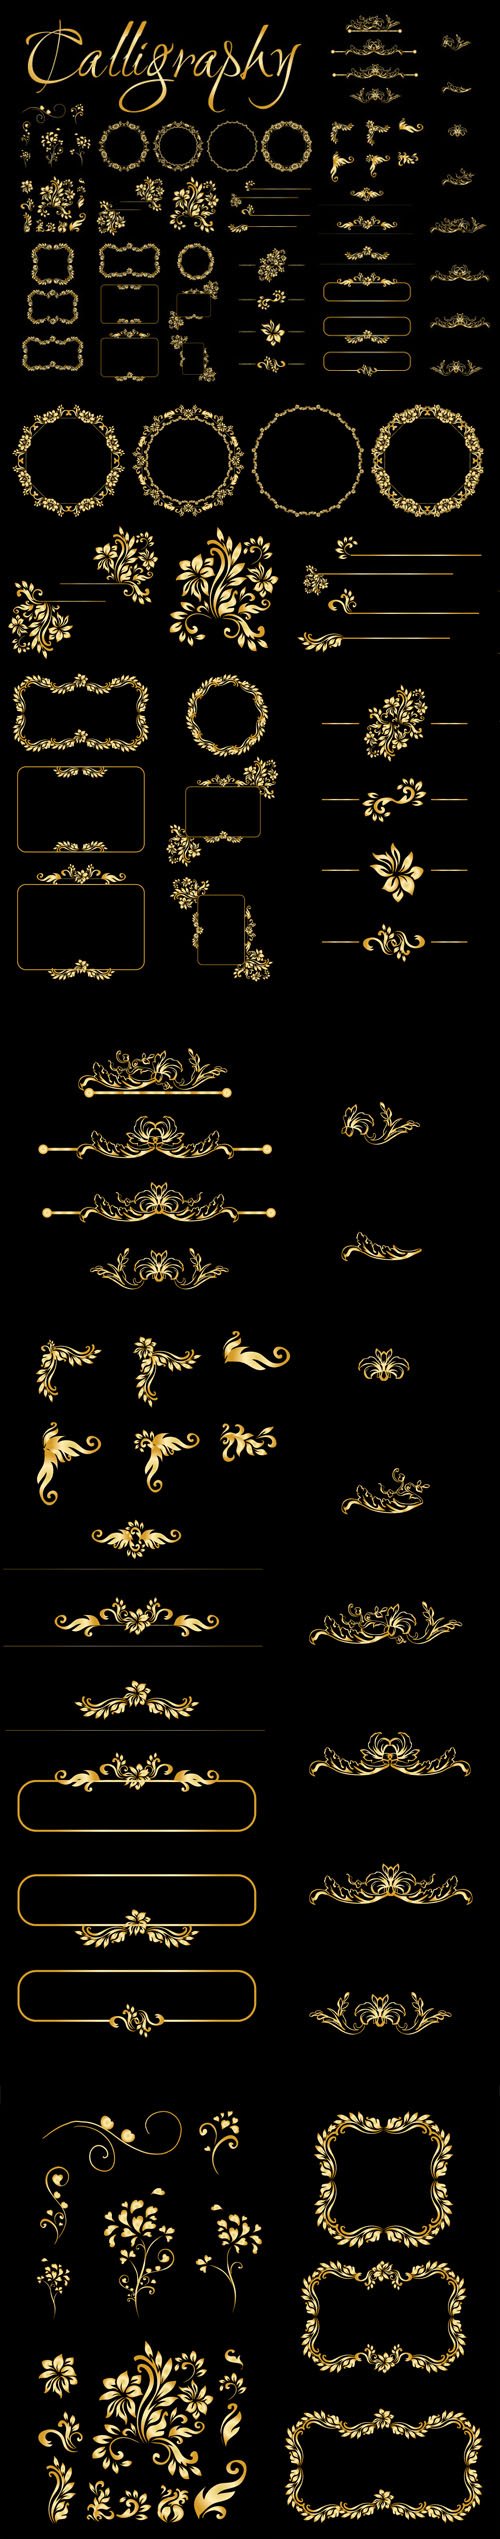 Golden Calligraphy Elements Vector Design Templates